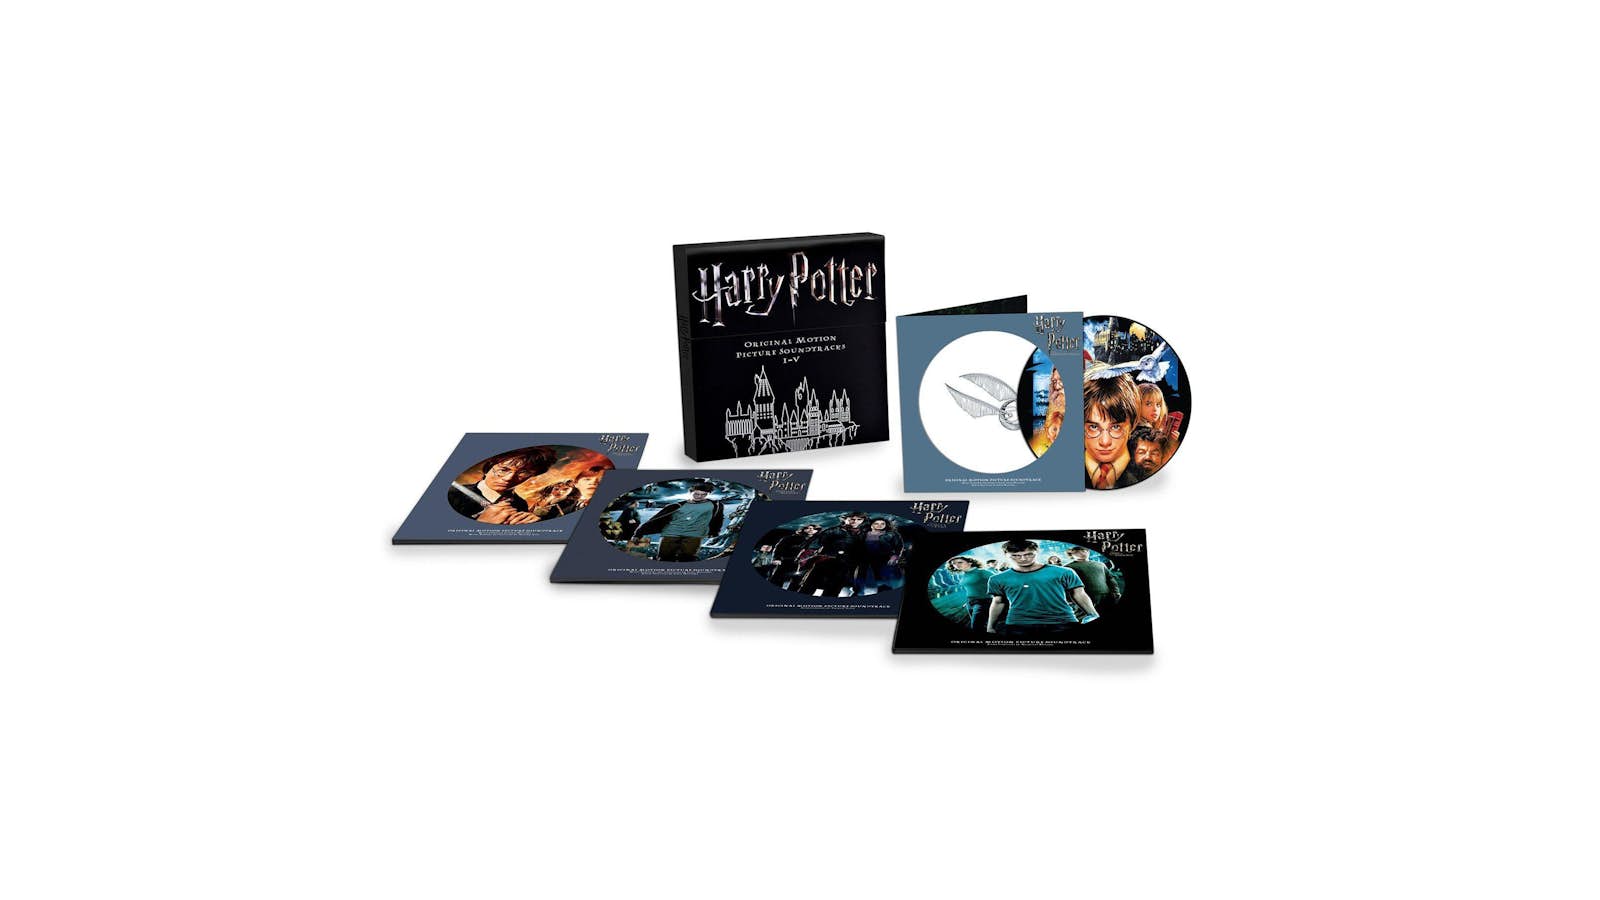 Harry Potter / O.S.T. HARRY POTTER / Original Soundtrack Limited Edition Box  Set Vinyl Record